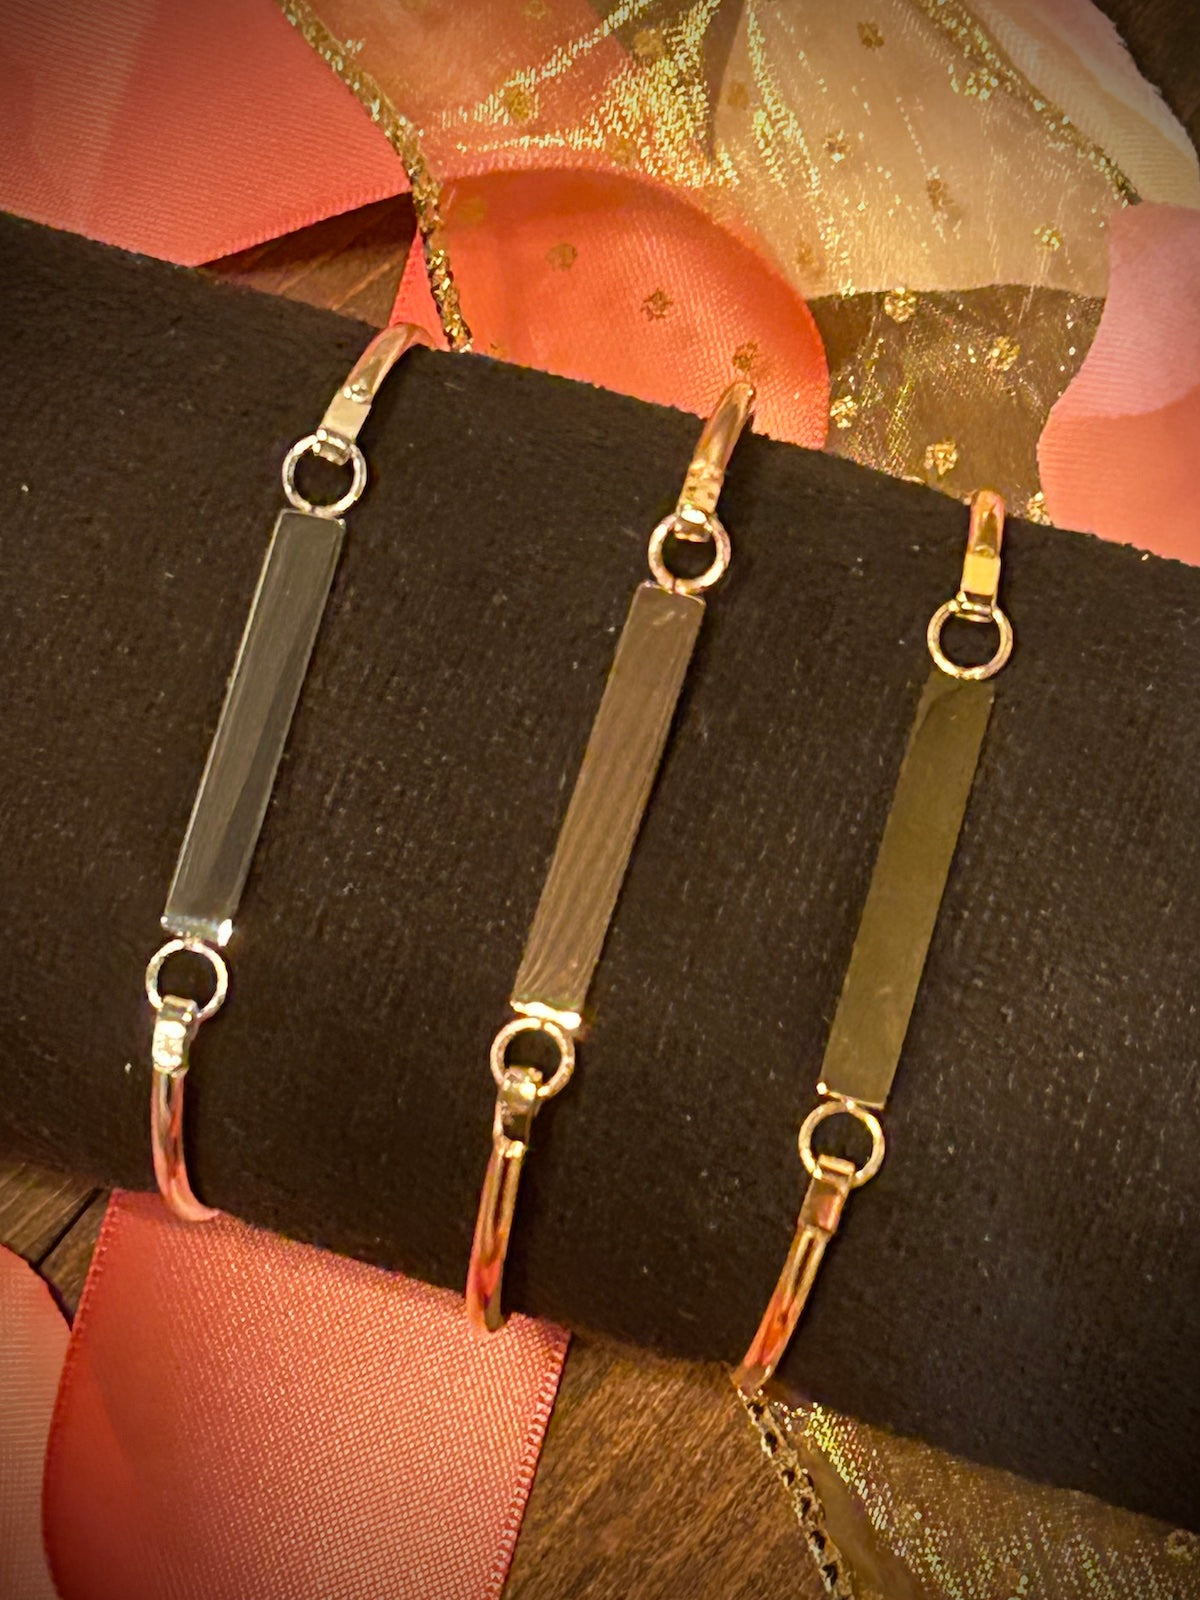 Gold, Silver, or Rose Gold Stainless Steel Flat Bar Bangle Bracelets